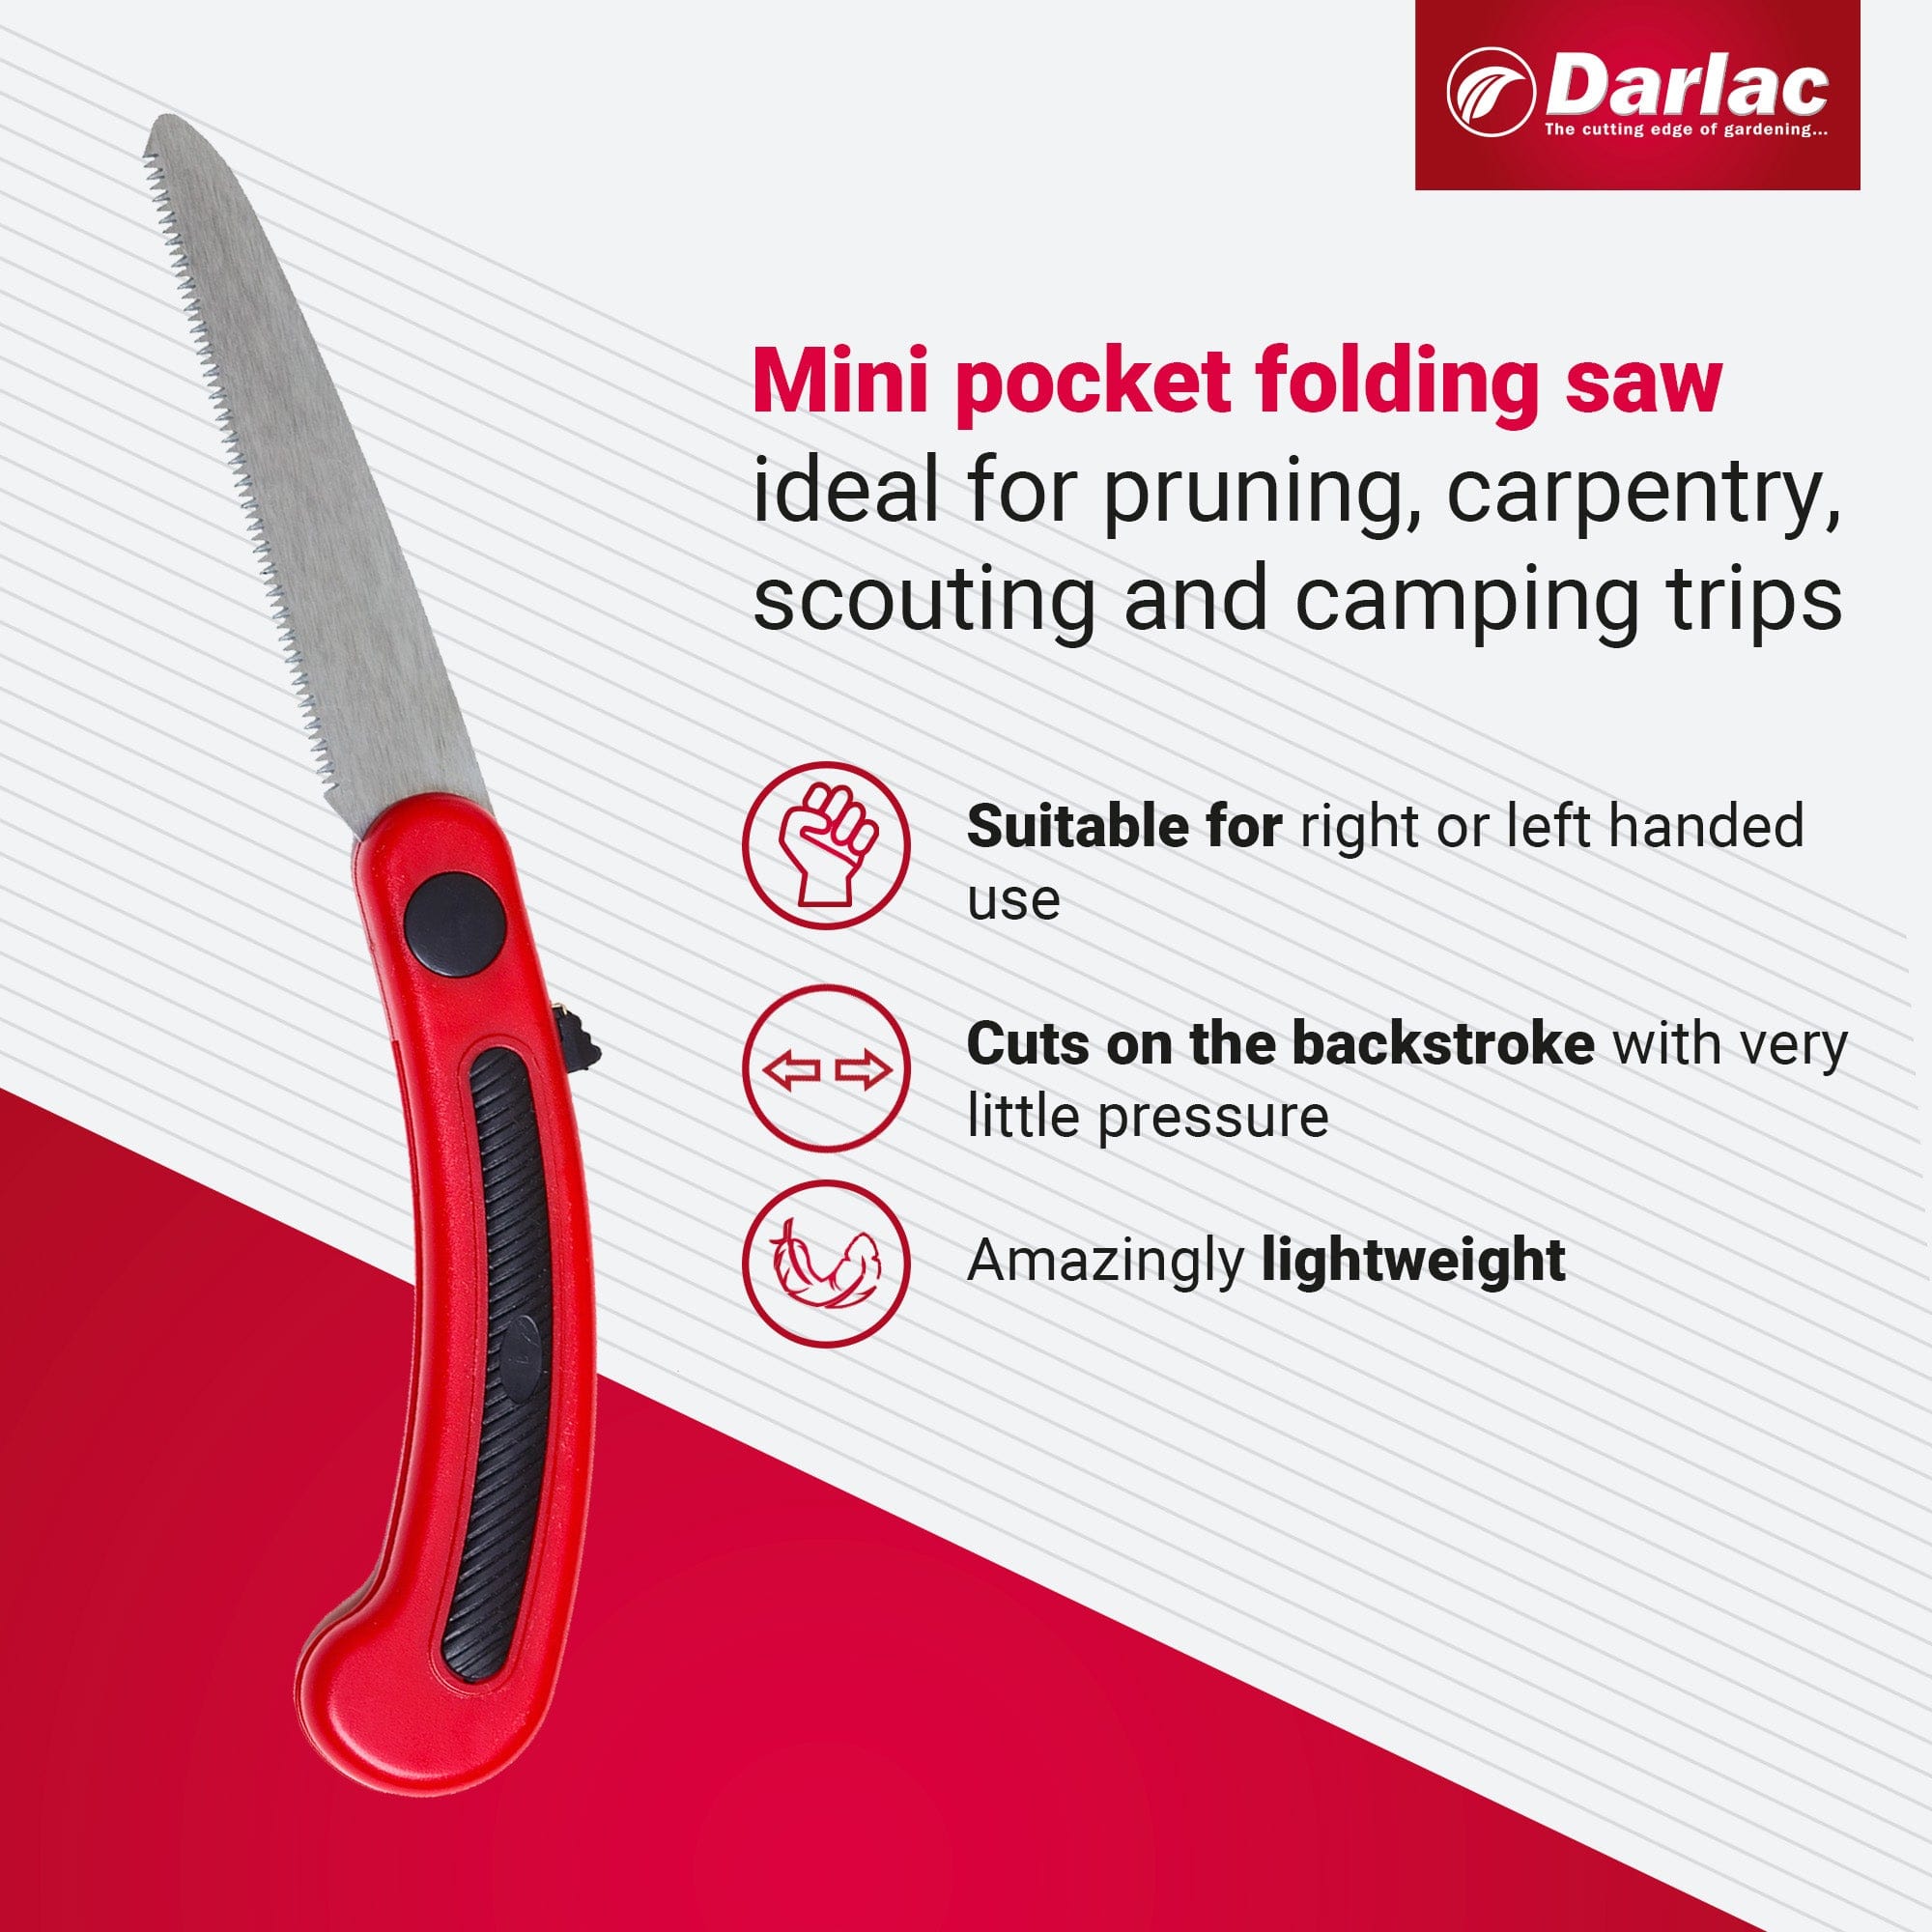 dt-brown HARDWARE Darlac Mini Pocket Folding Saw